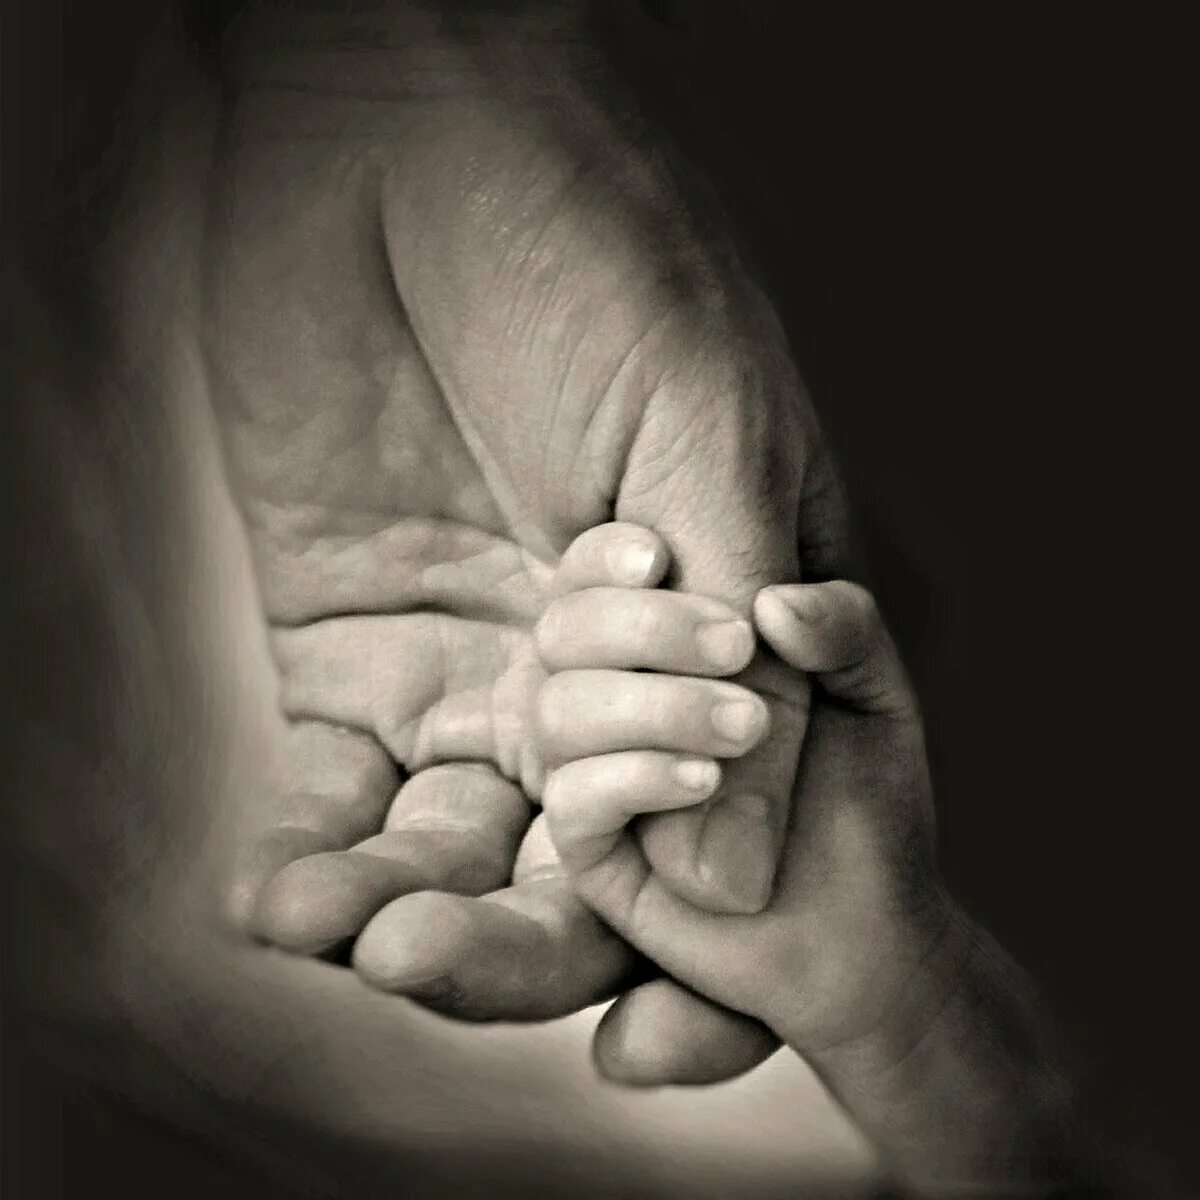 Рука отца и дочери. Руки отца. Детская рука в руке. Мужская и детская рука. Рука отца и сына.